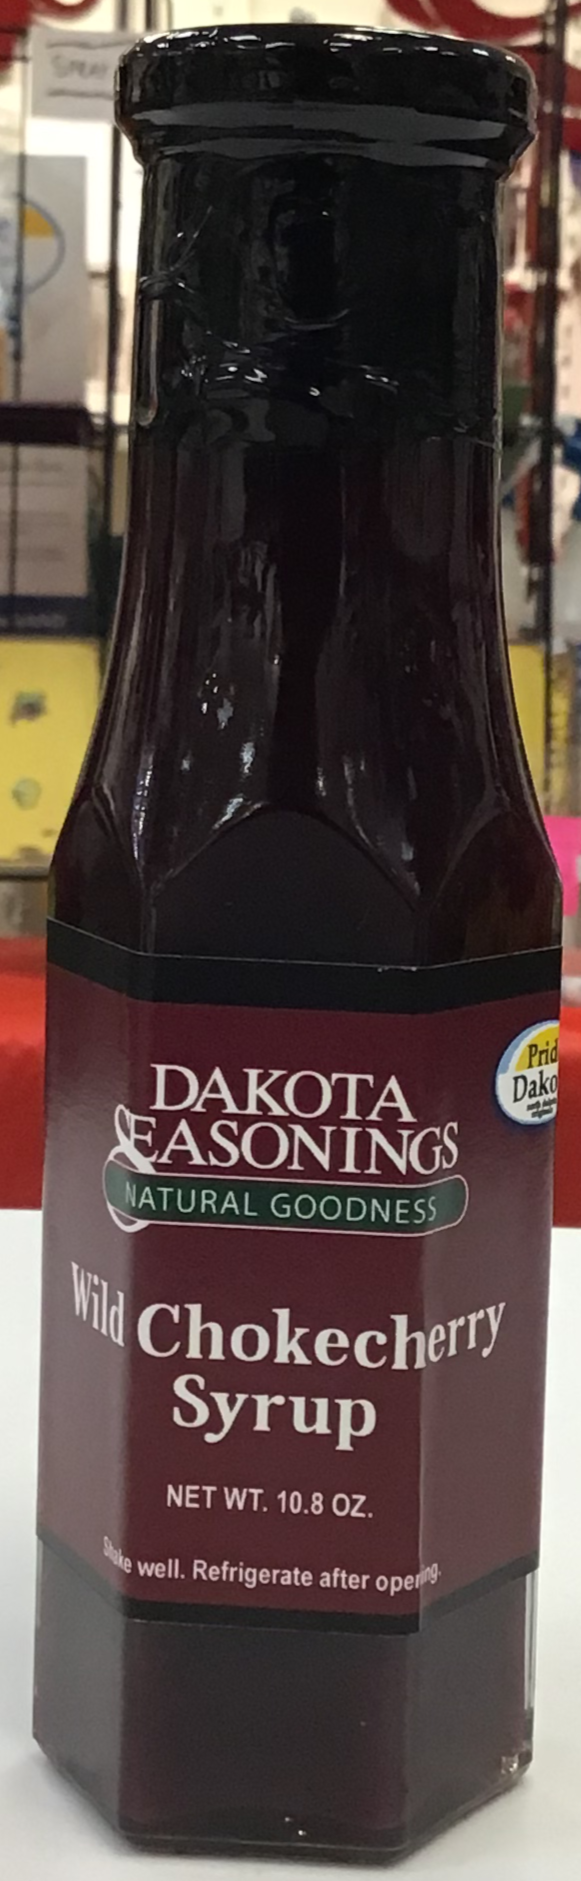 Dakota Seasonings Wild Chokecherry Syrup 10.8 ounce